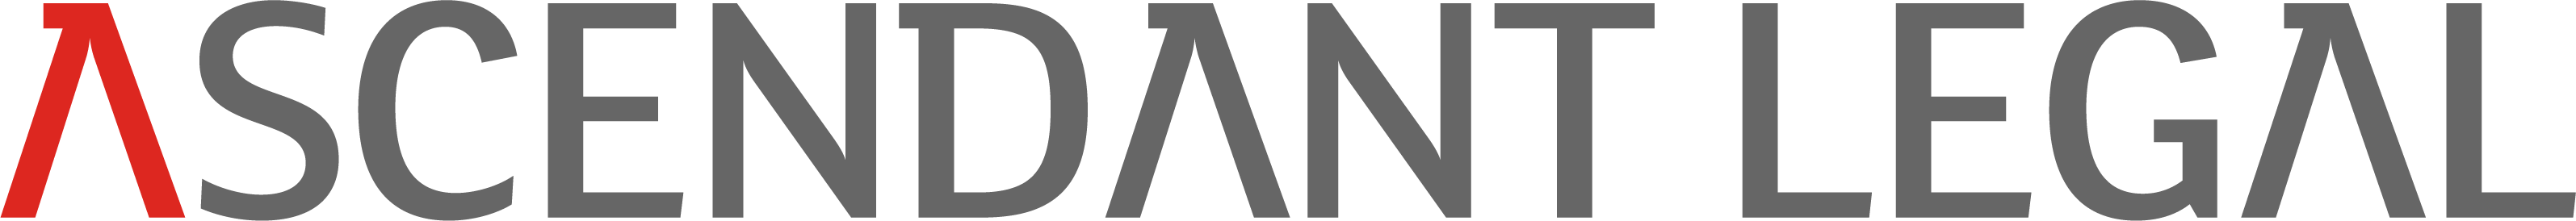 Ascendant Legal logo